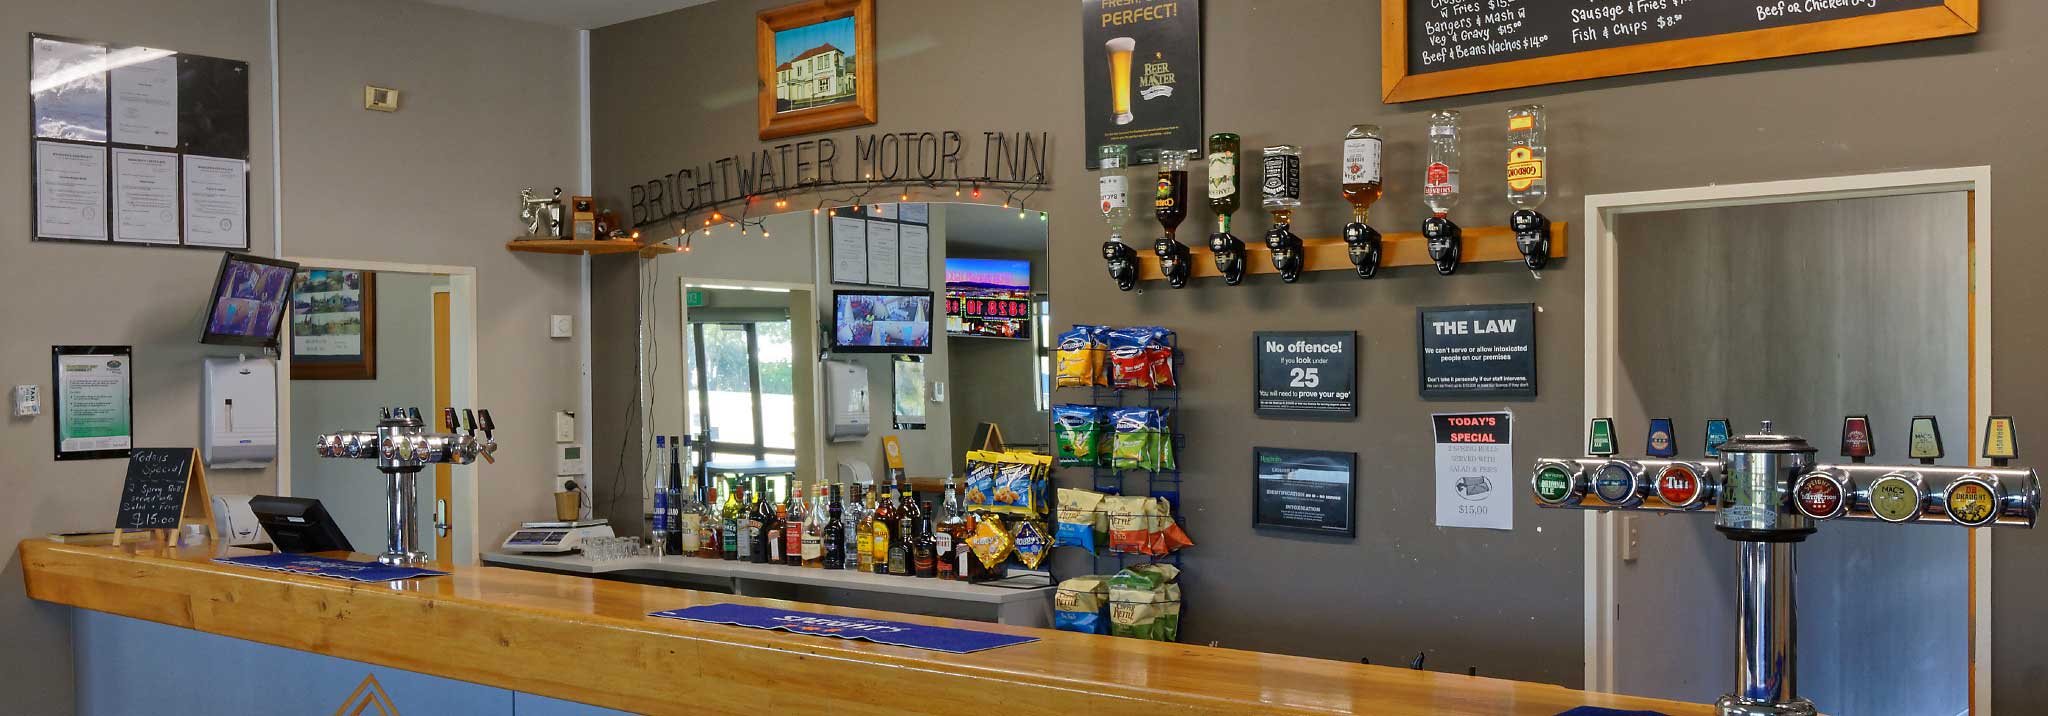 Brightwater Motor Inn bar